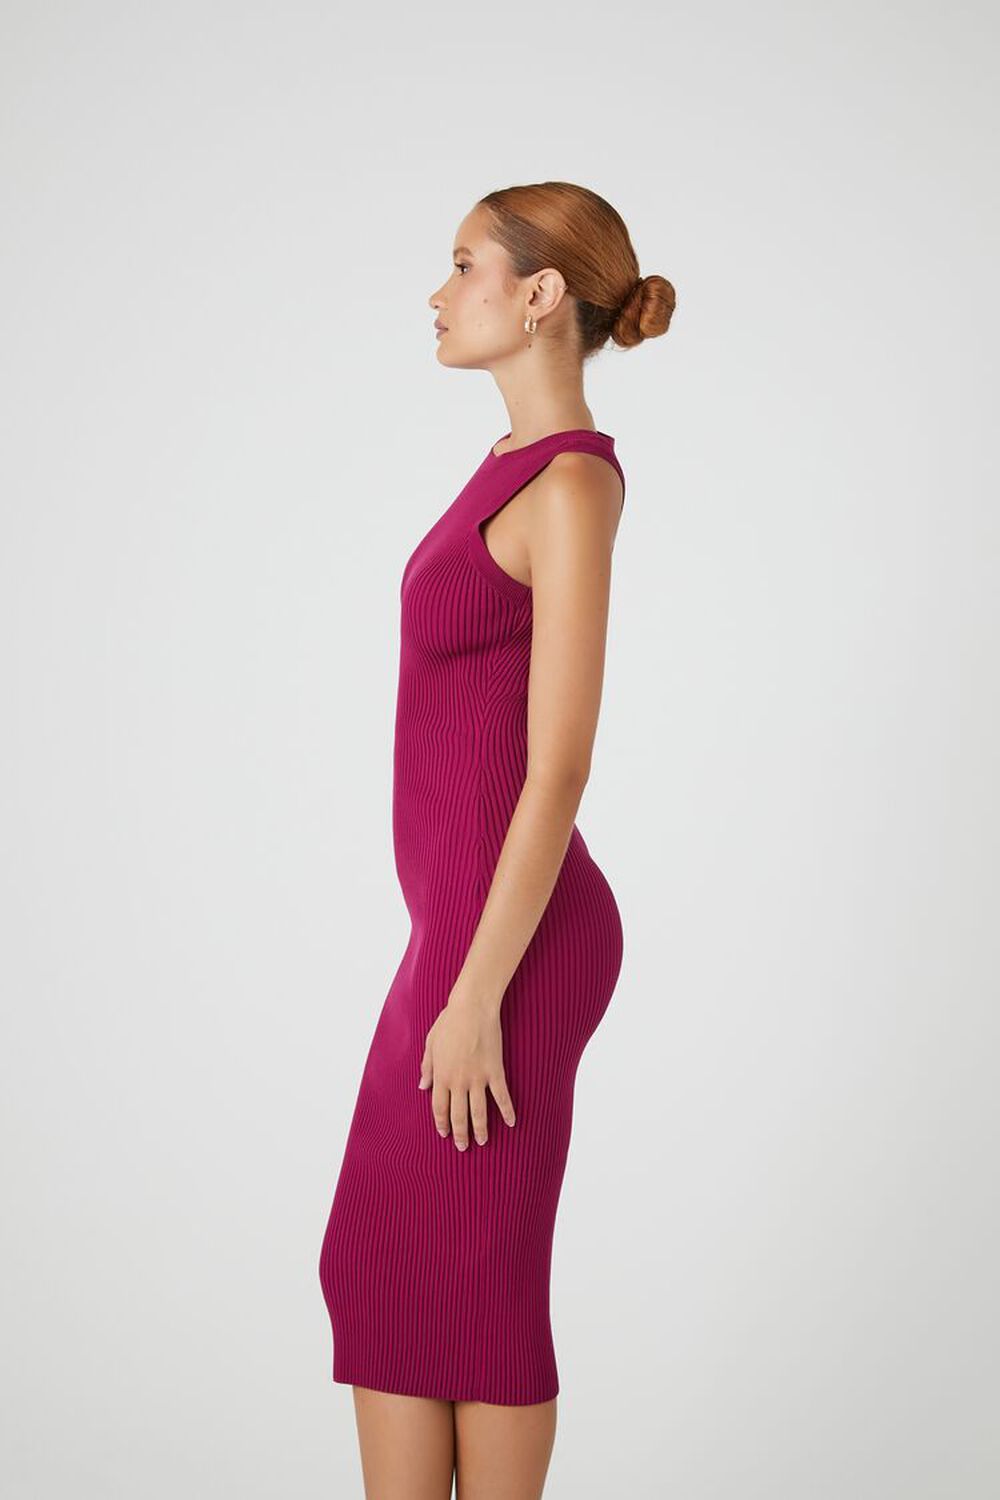 Neon Pink Stripe Bodycon Silhouette Dress, $20.00